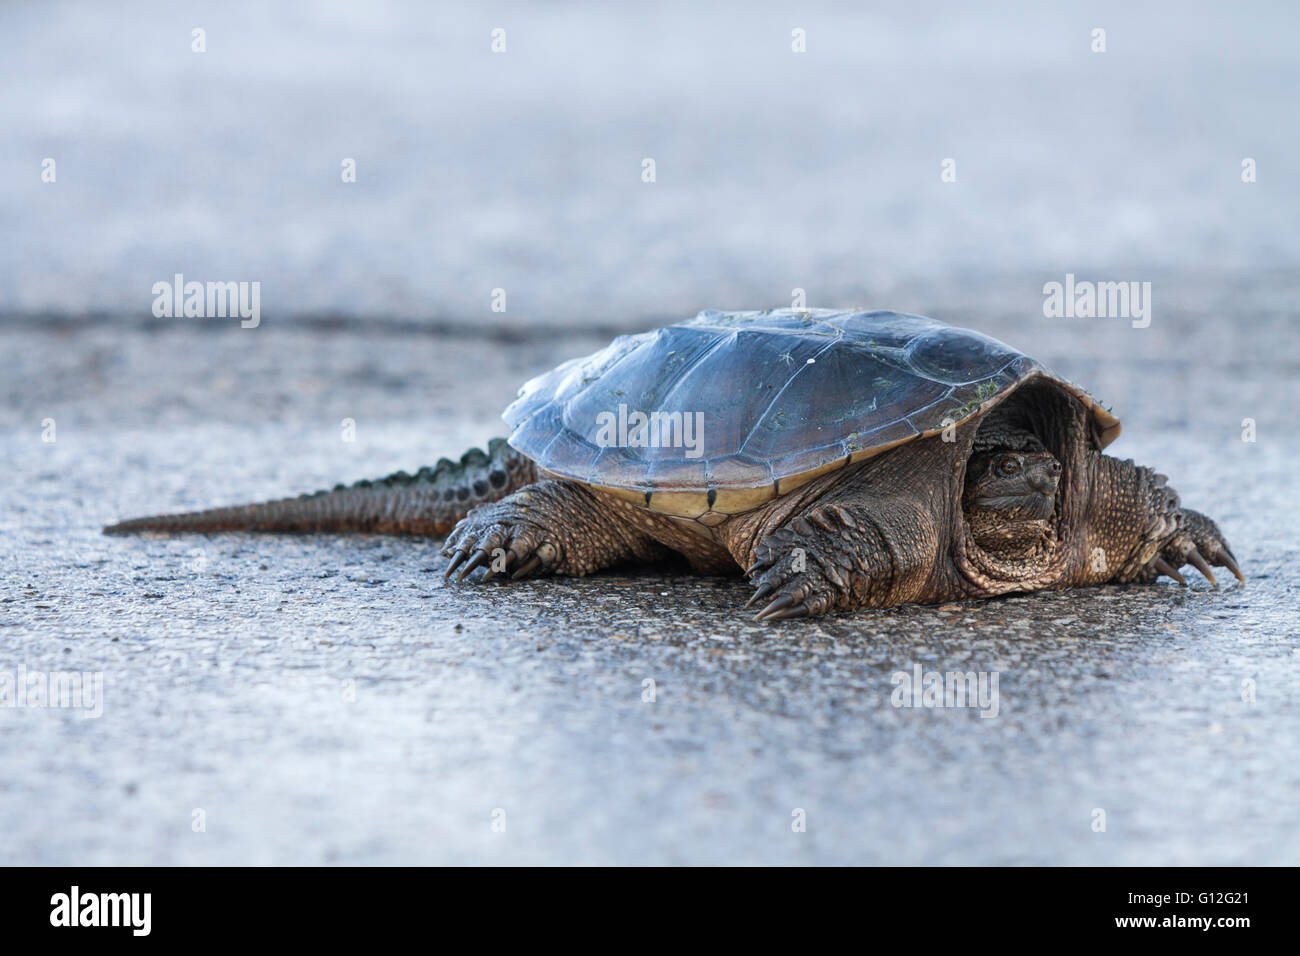 snapping turtle (Chelydra serpentina) Stock Photo